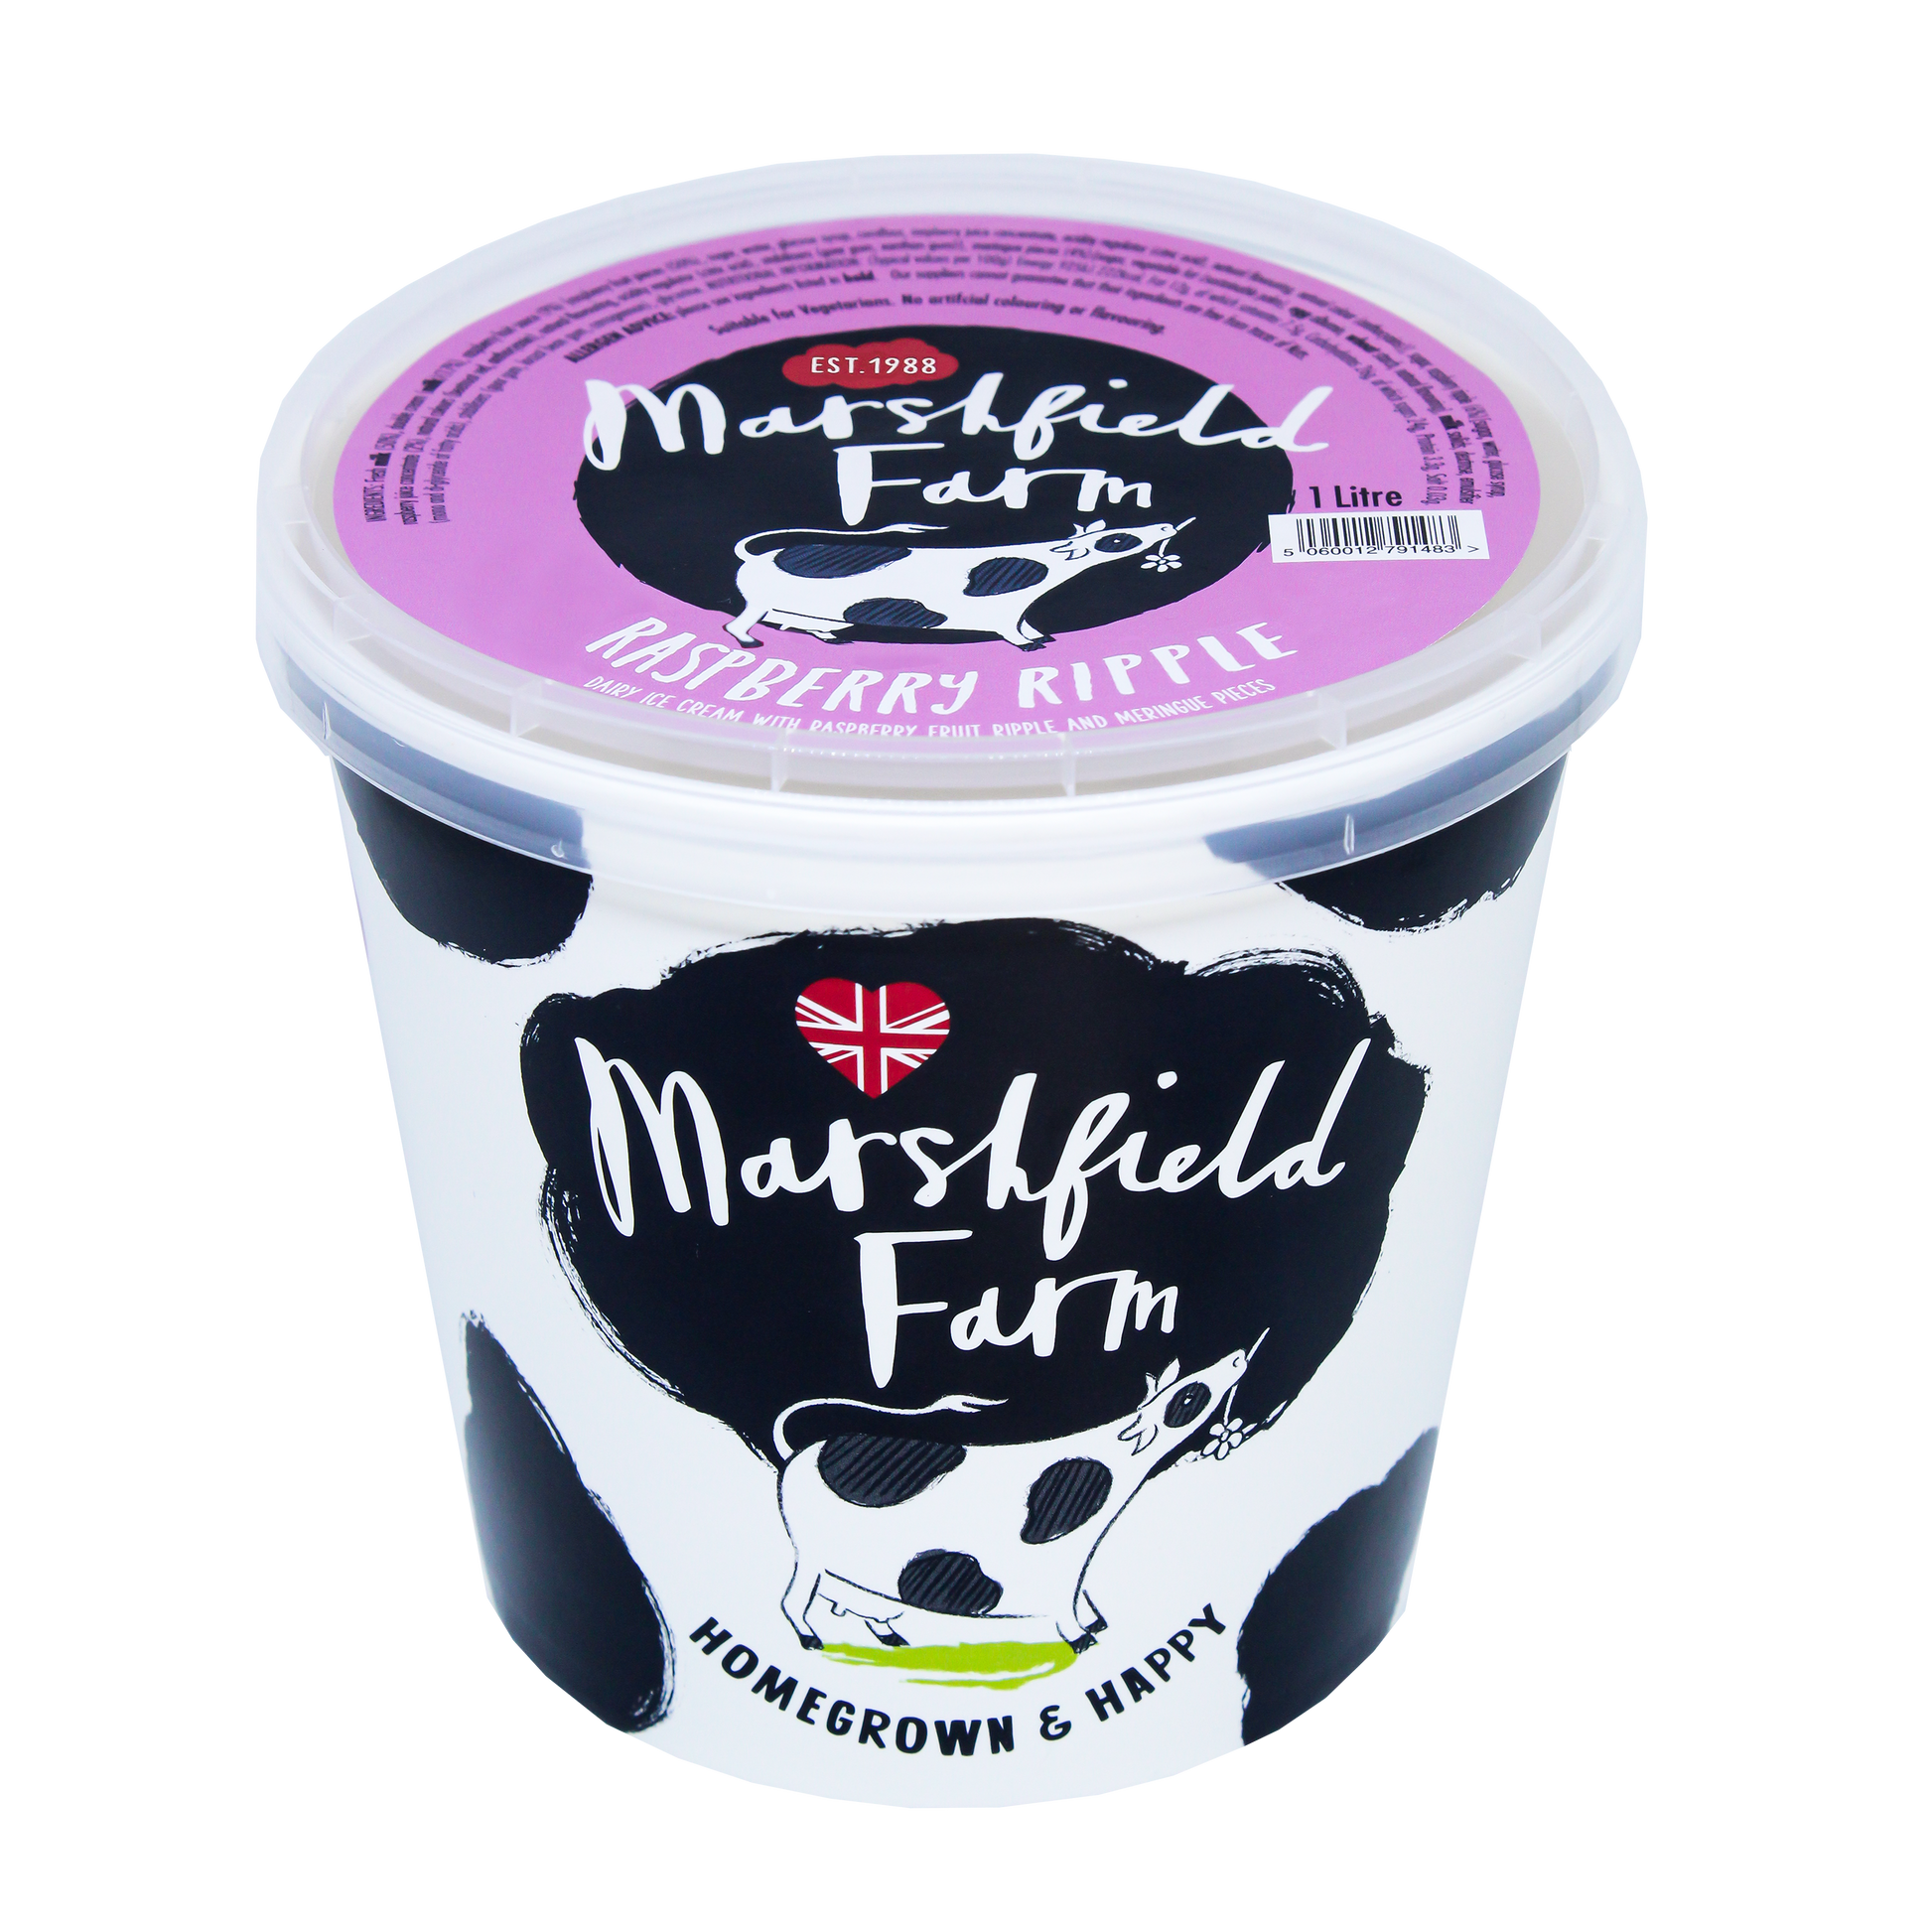 Marshfield Farm Raspberry Ripple Ice Cream 1 Litre Tub